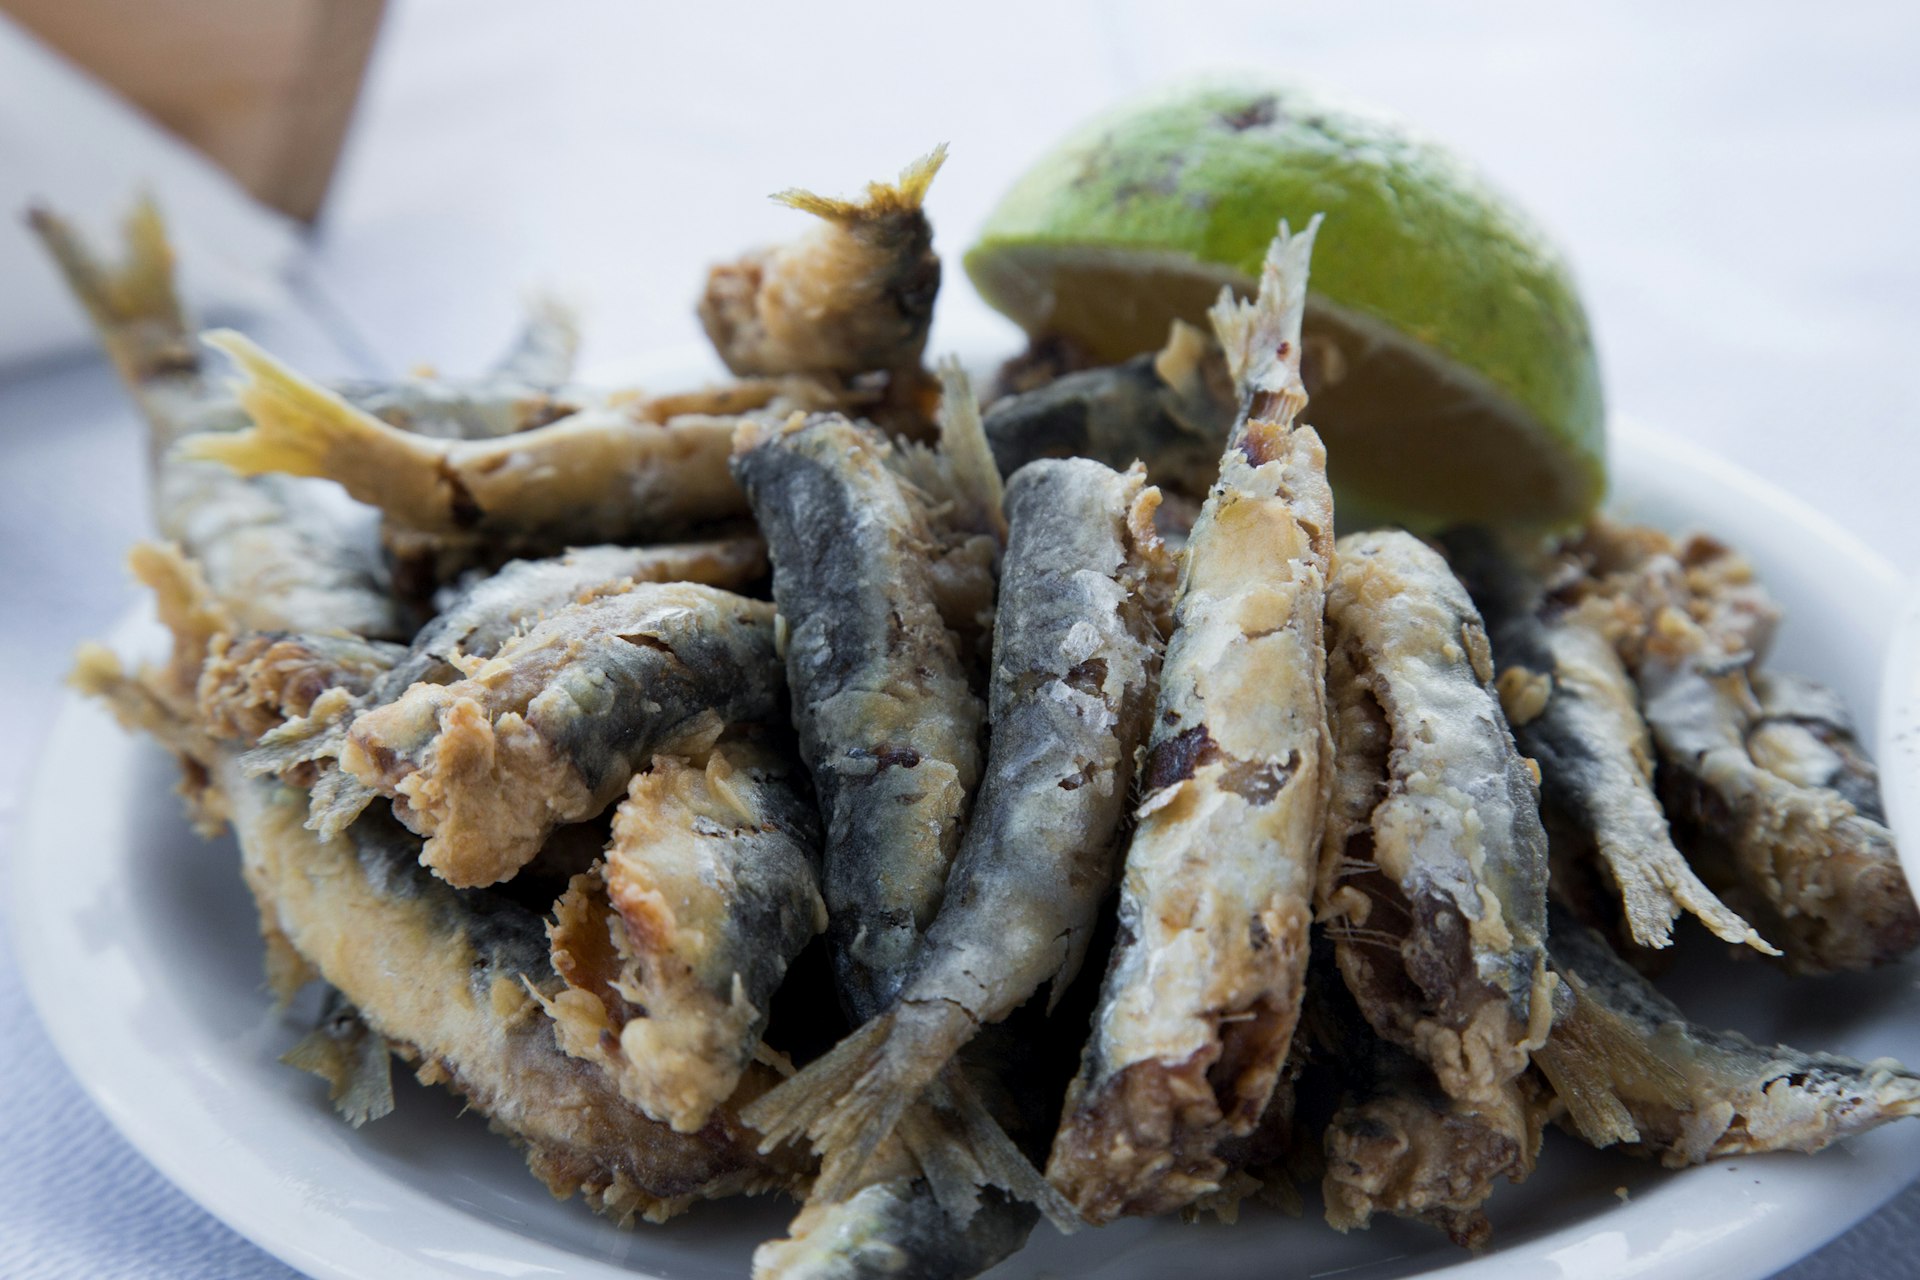 Plate of fried sardines at taverna